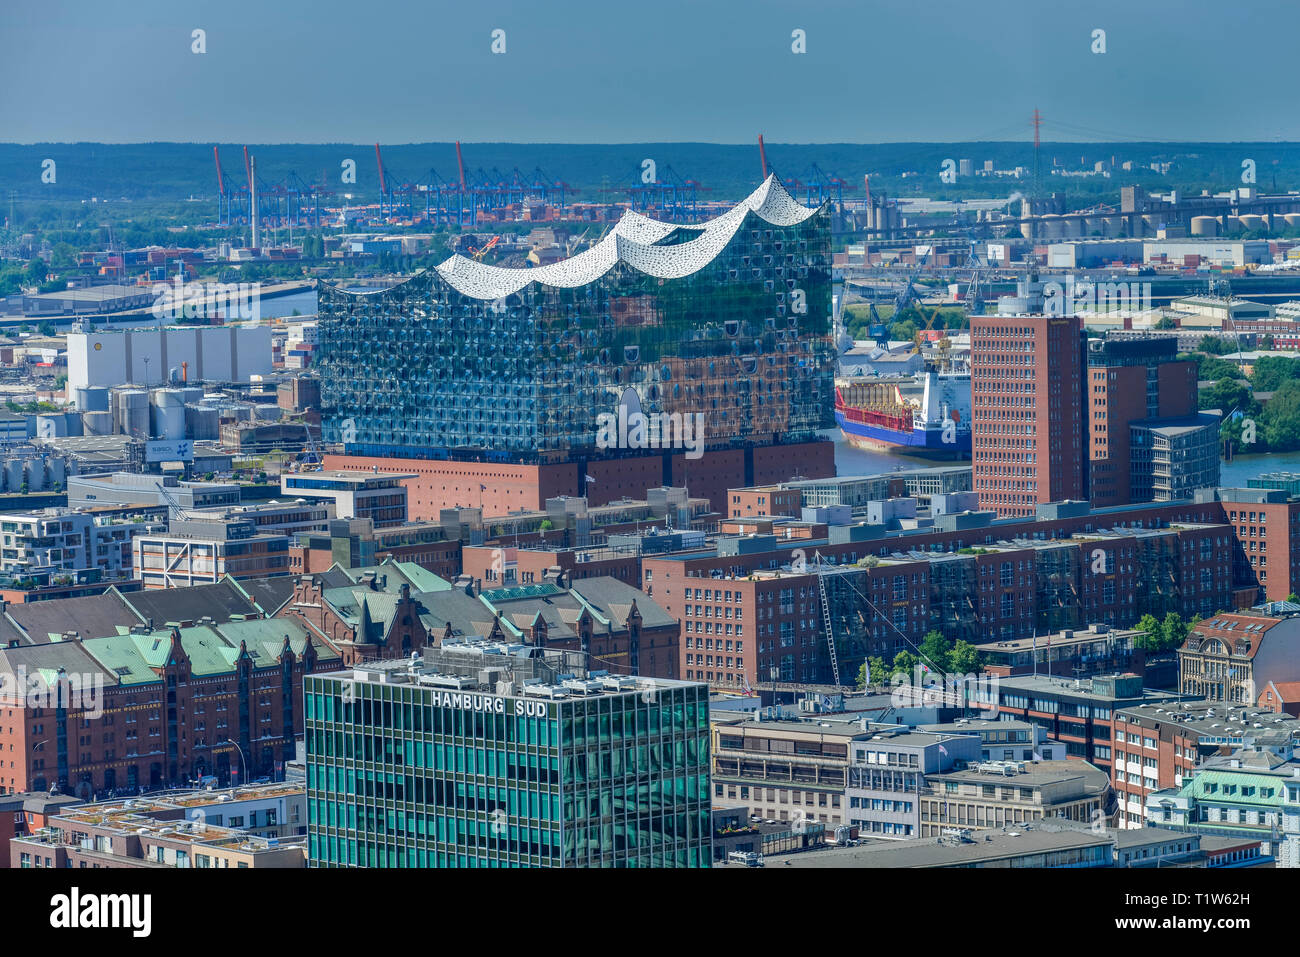 Elbphilharmonie, Speicherstadt, Hafencity, Hamburgo, Alemania Foto de stock